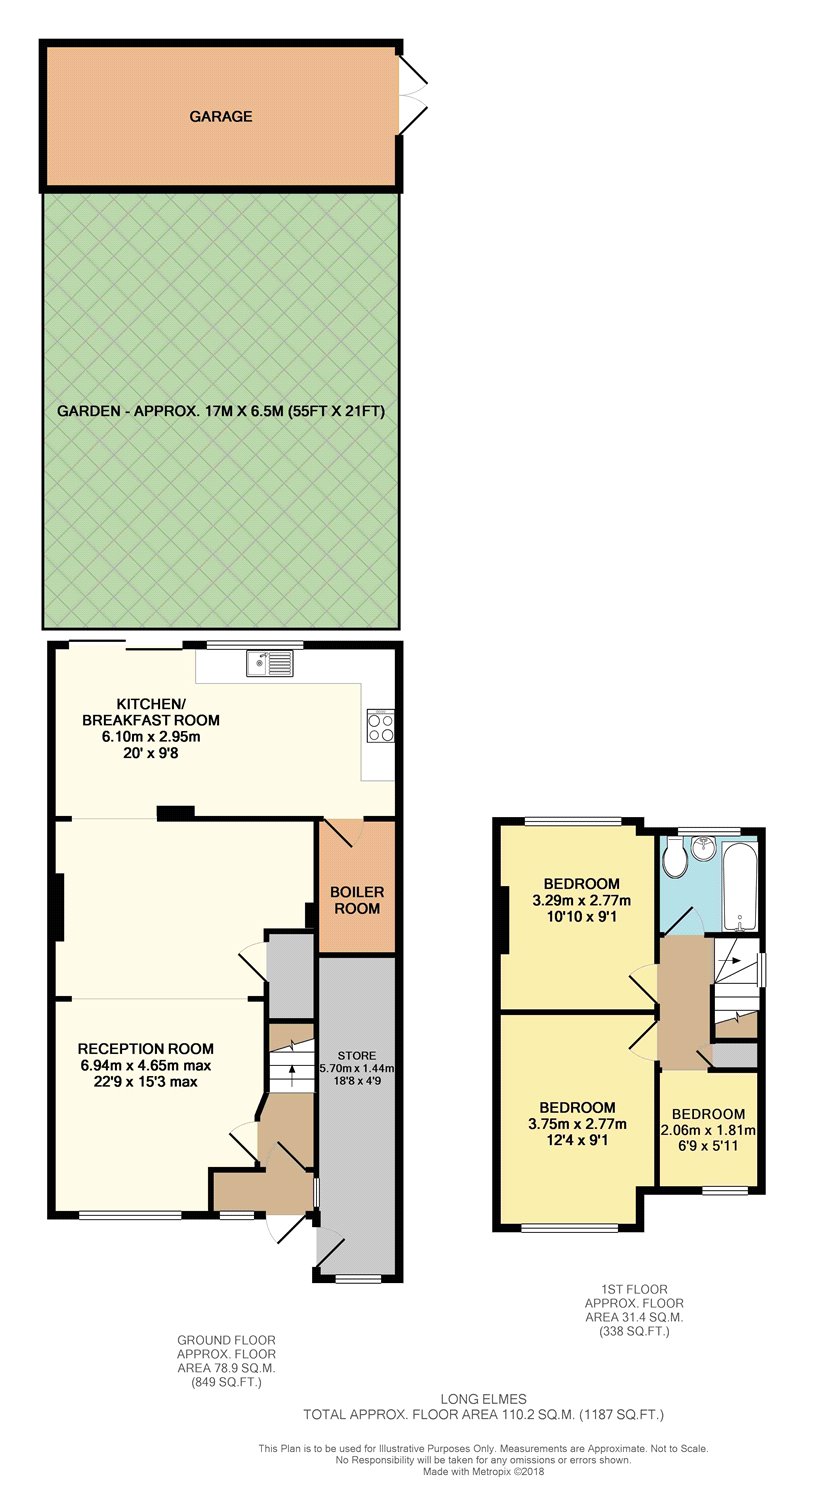 3 Bedrooms Semi-detached house to rent in Long Elmes, Harrow HA3